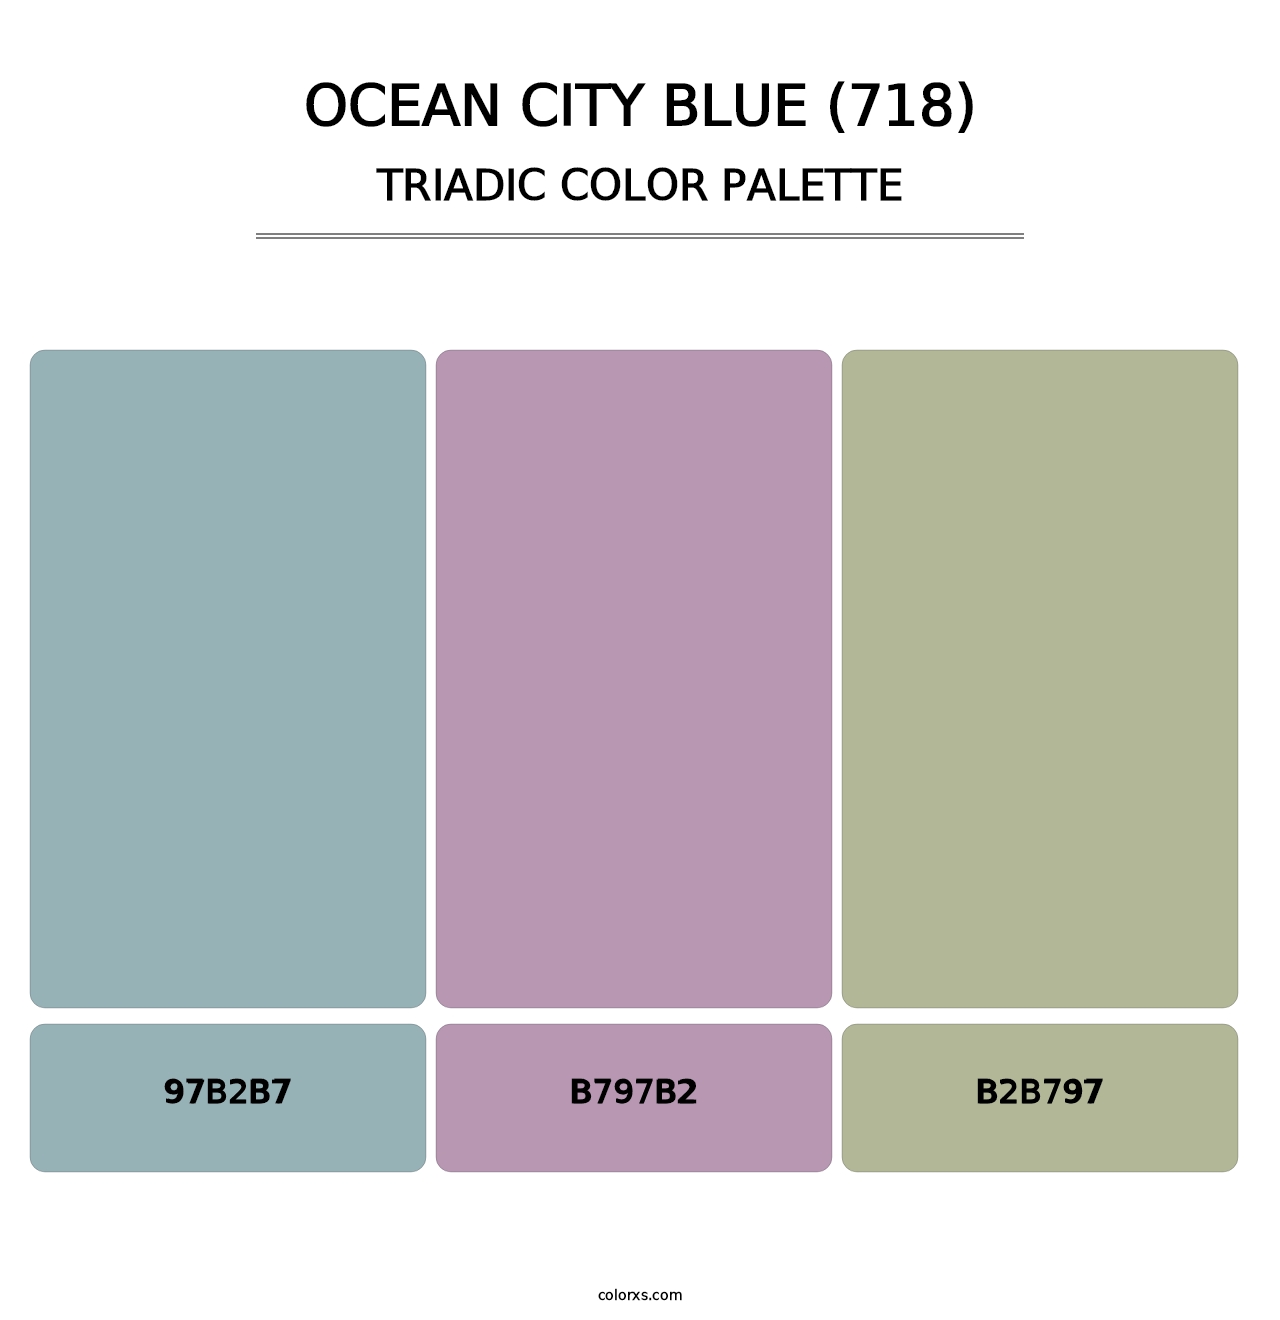 Ocean City Blue (718) - Triadic Color Palette